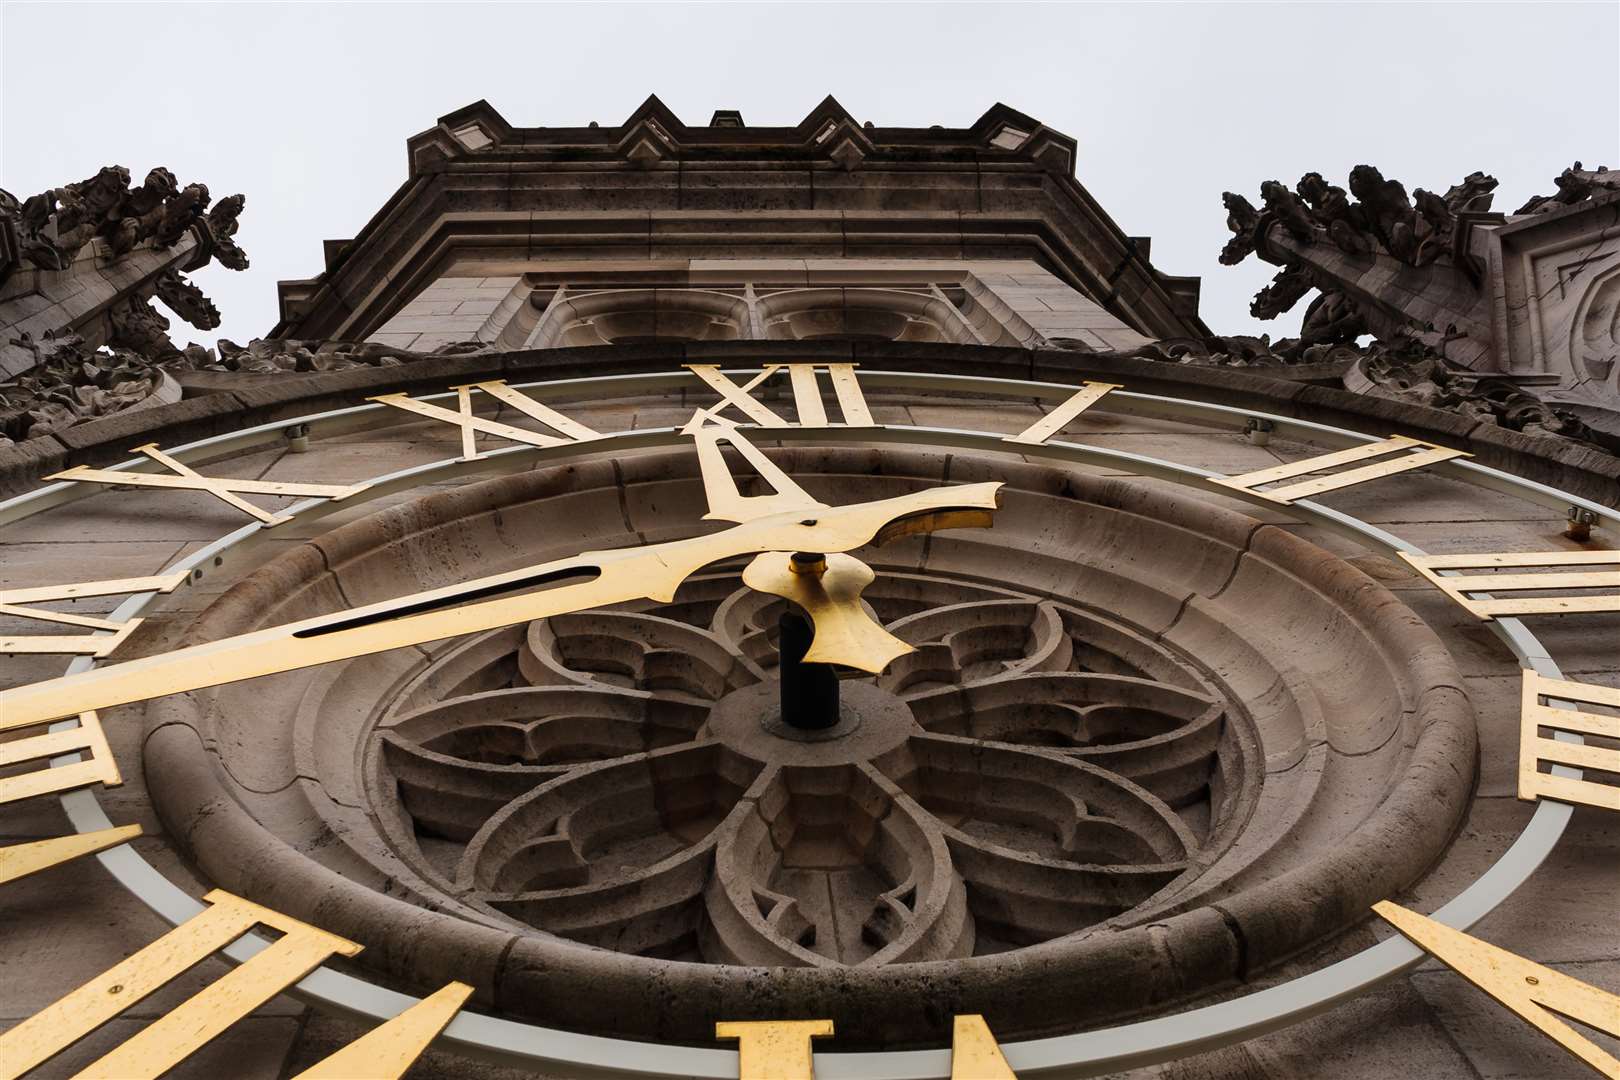 The impressive clock on the belfry in Arras